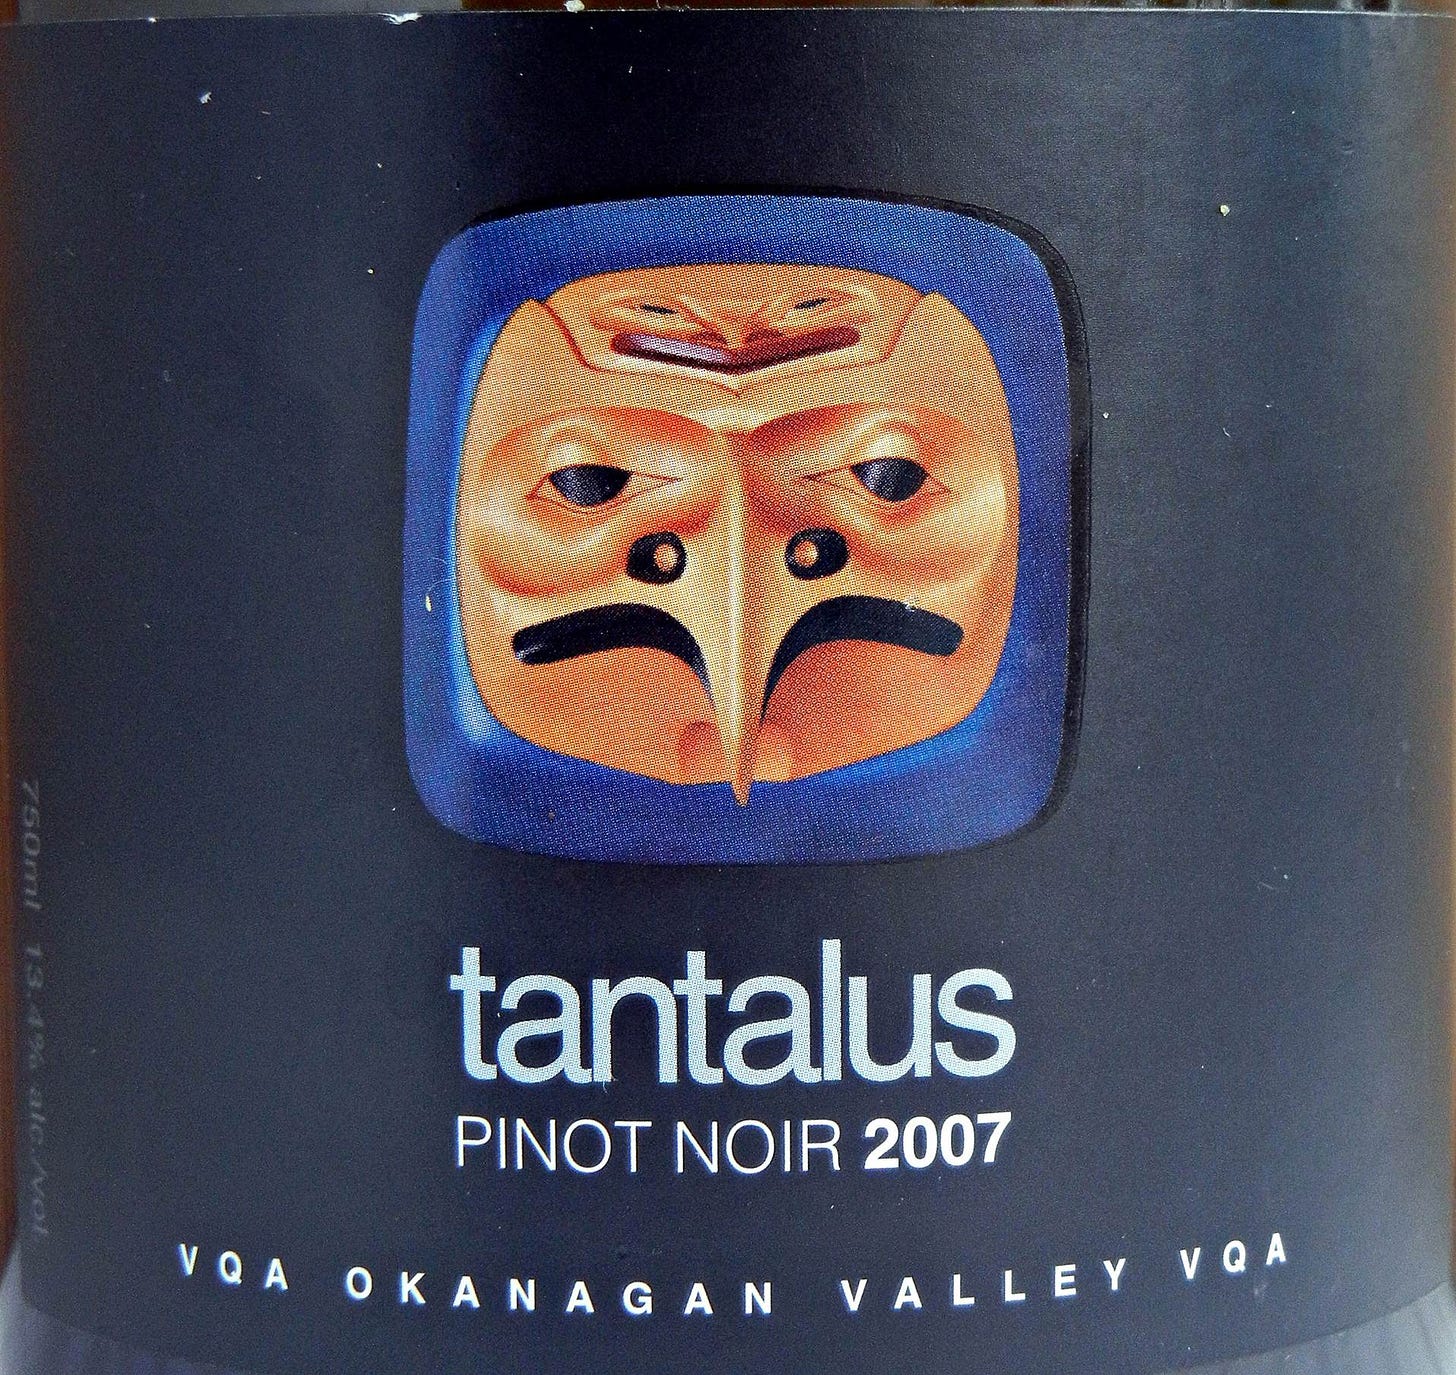 Tantalus Pinot Noir 2007 Label - BC Pinot Noir Tasting Review 23 